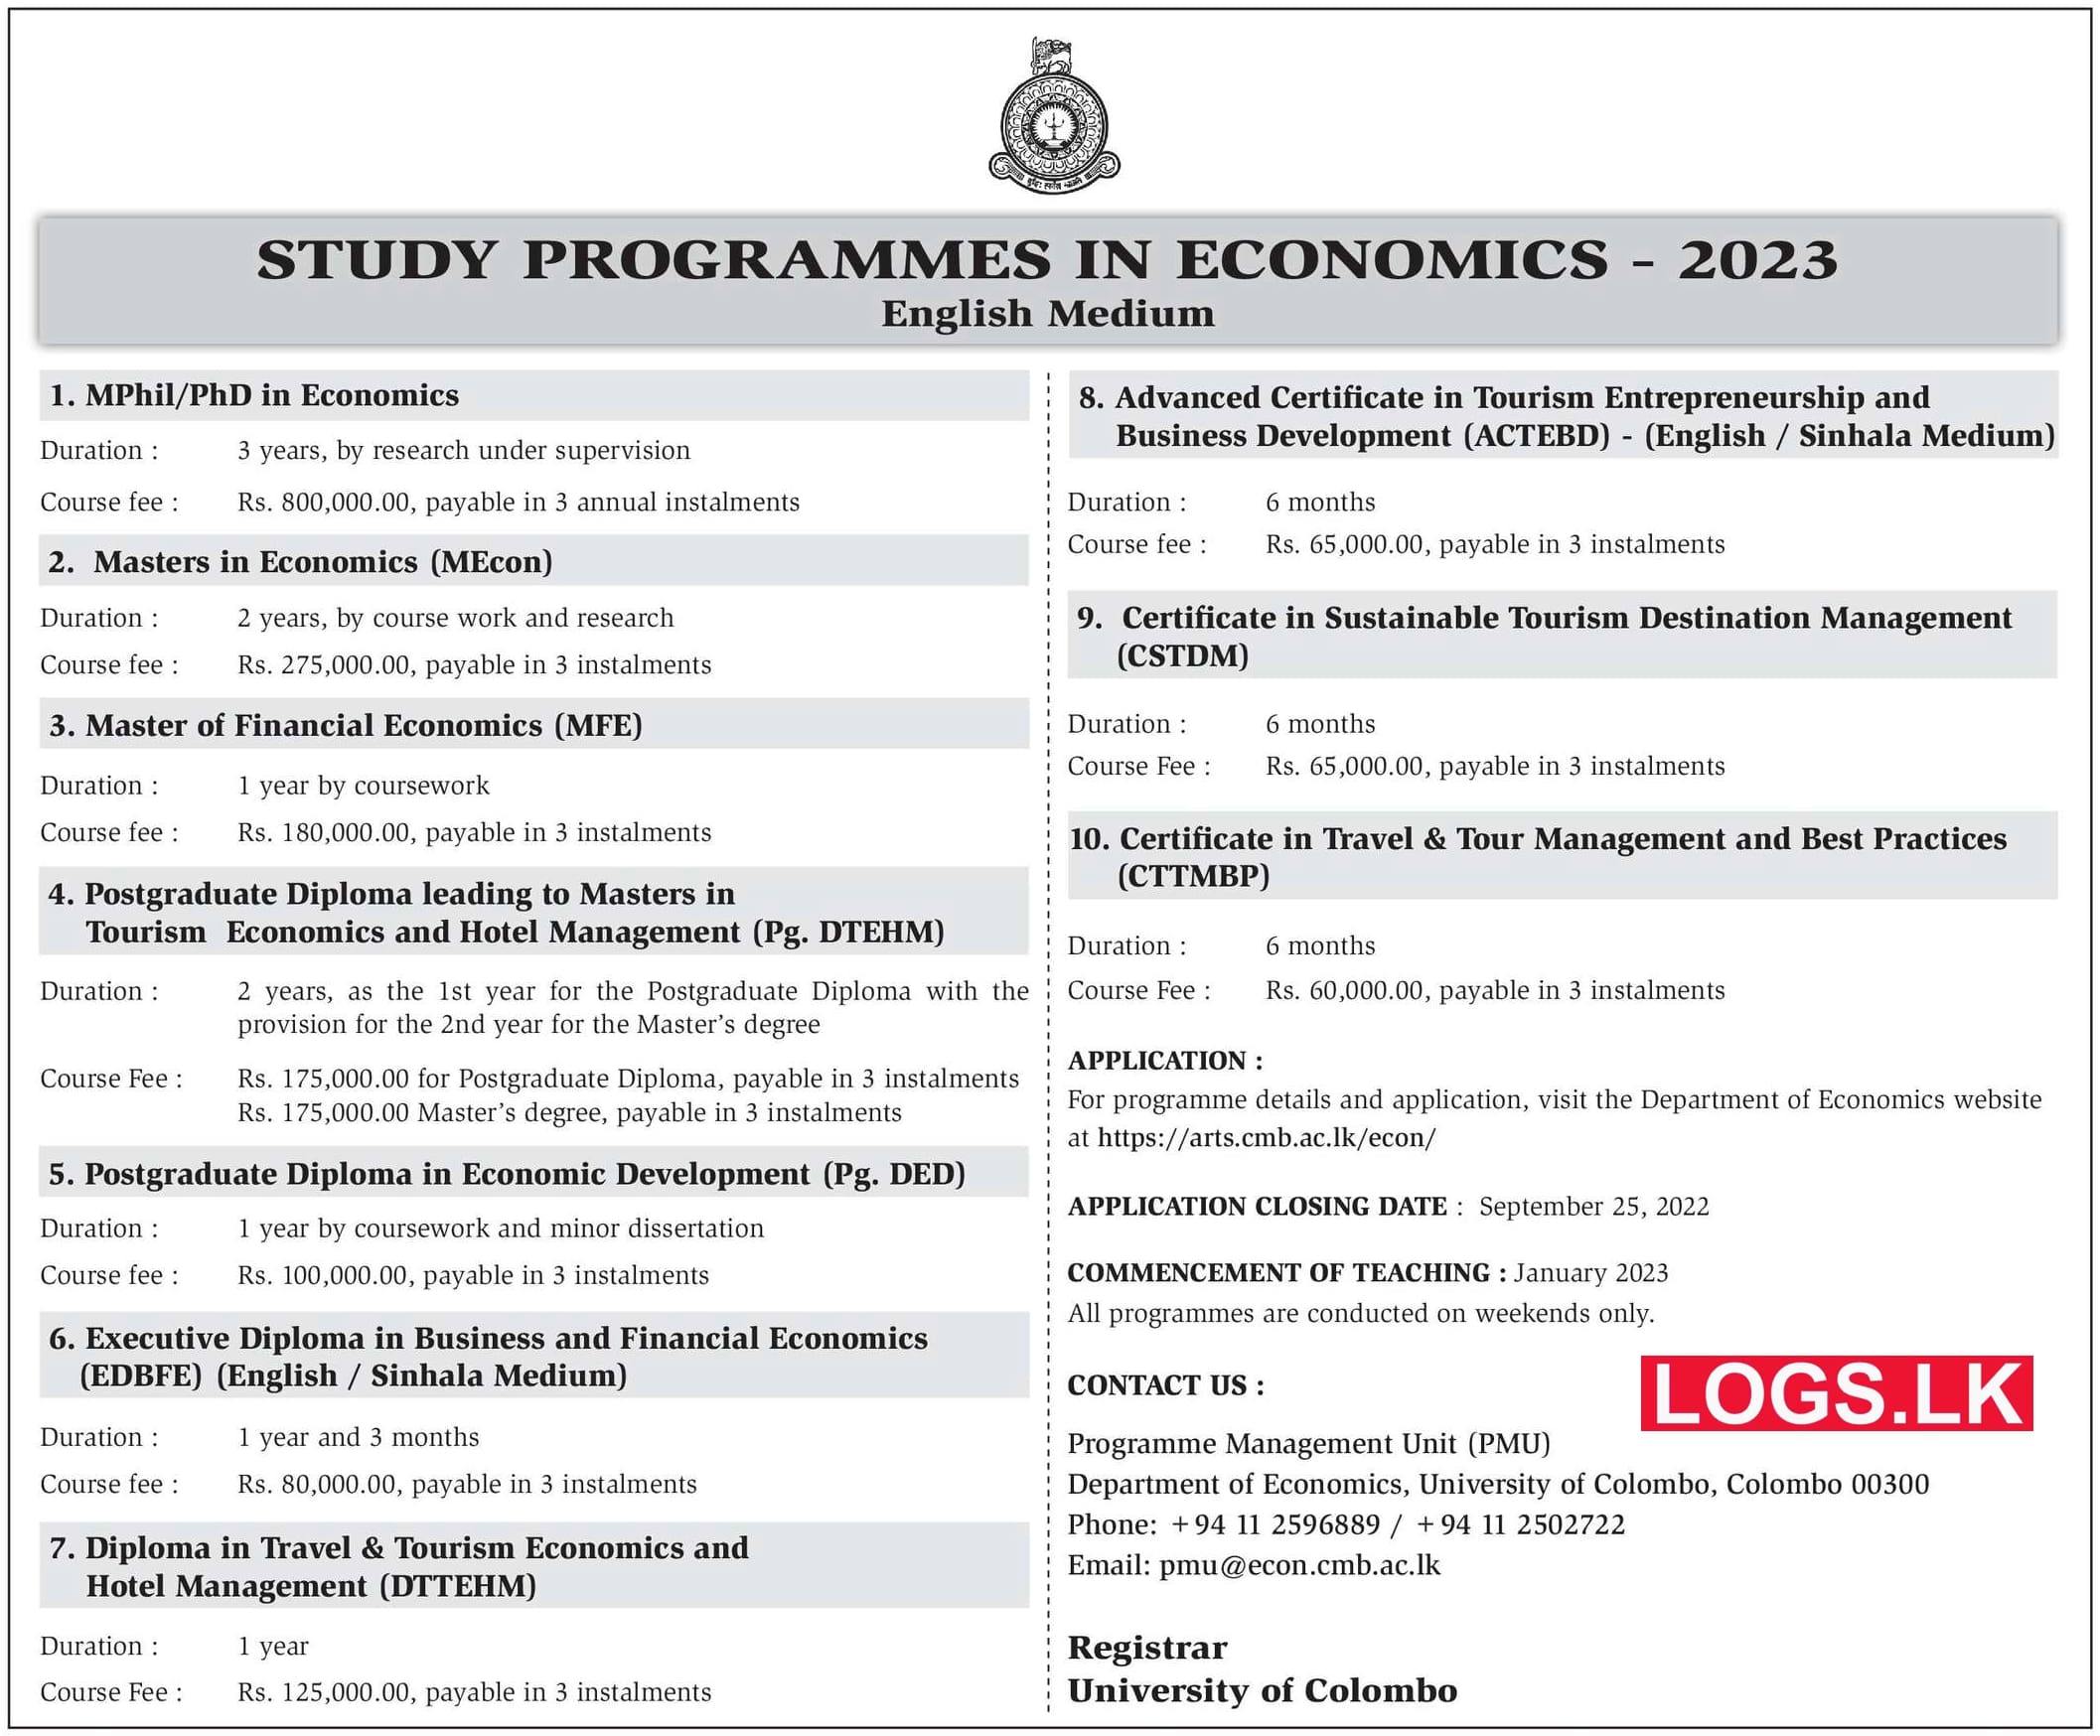 Study Programmes in Economics 2023 - University of Colombo Details, Application Form